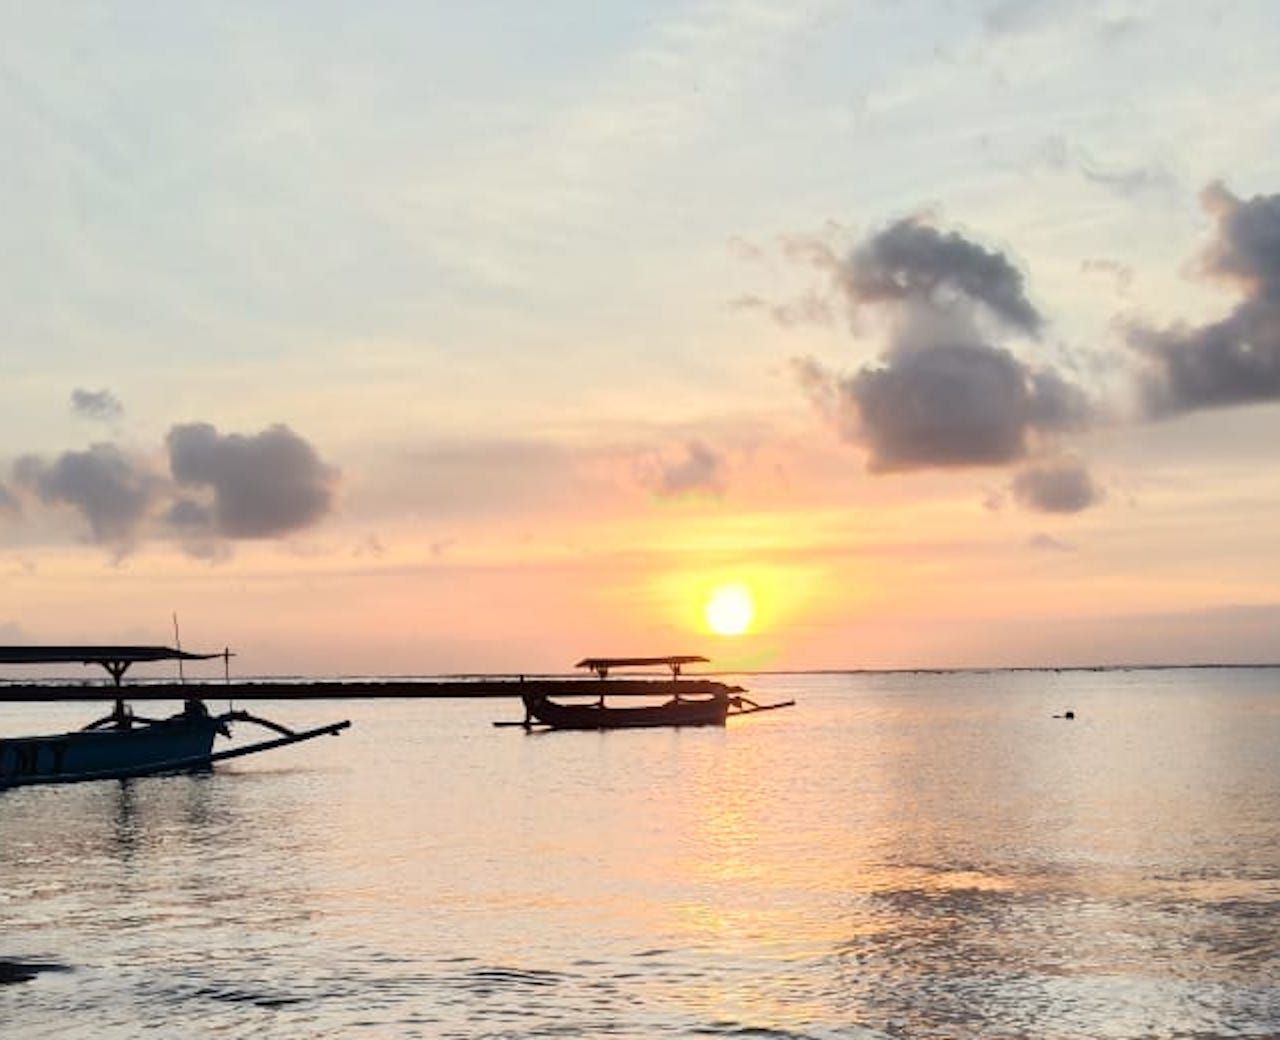  Pantai  Jerman  di  Bali Suguhkan Sunset  Yang Indah 